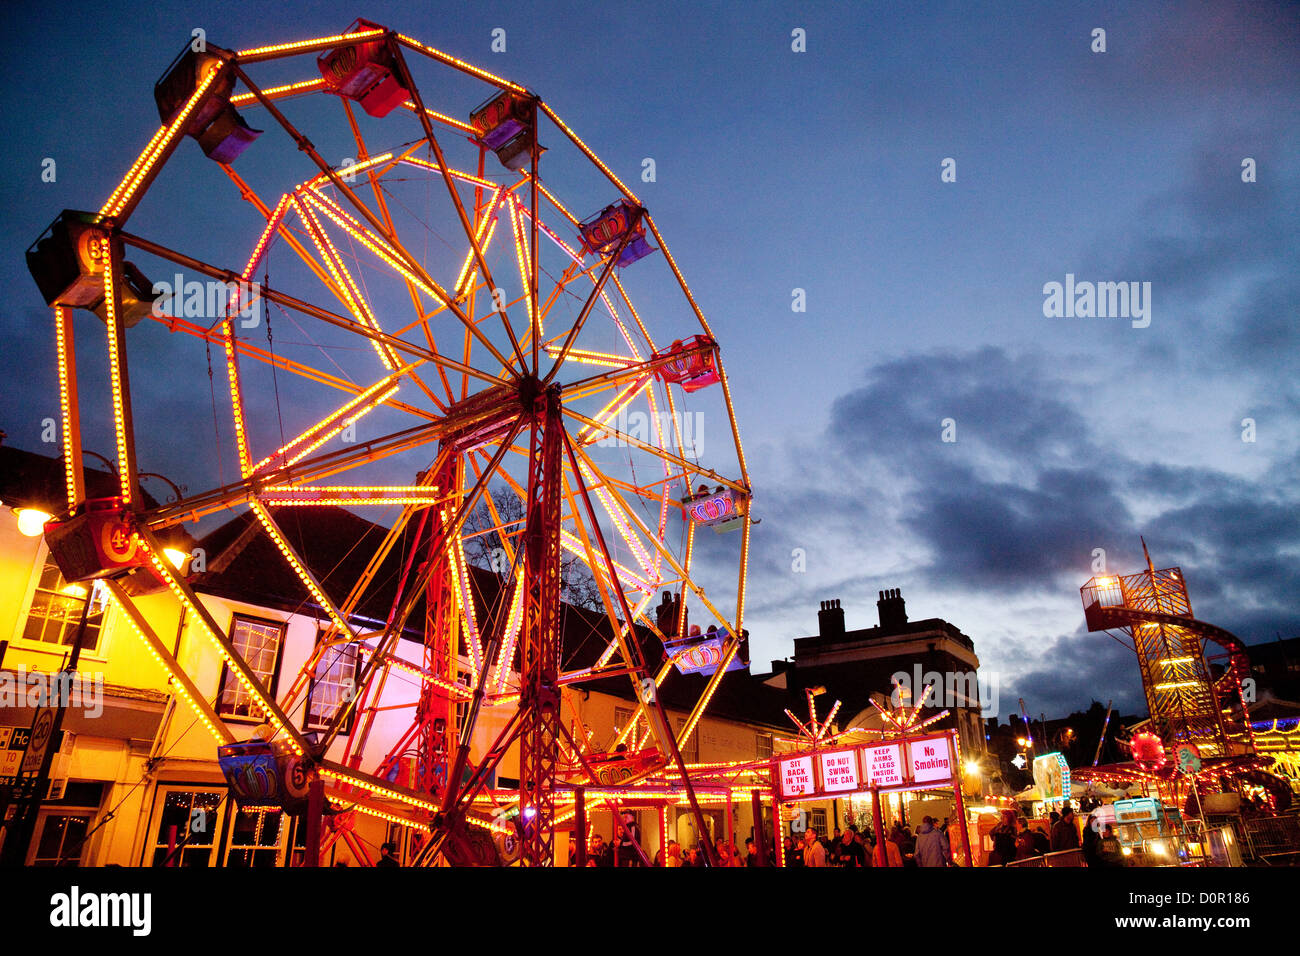 Big wheel and fairground, the Christmas market fair fayre, Bury St Edmunds, Suffolk UK Stock Photo